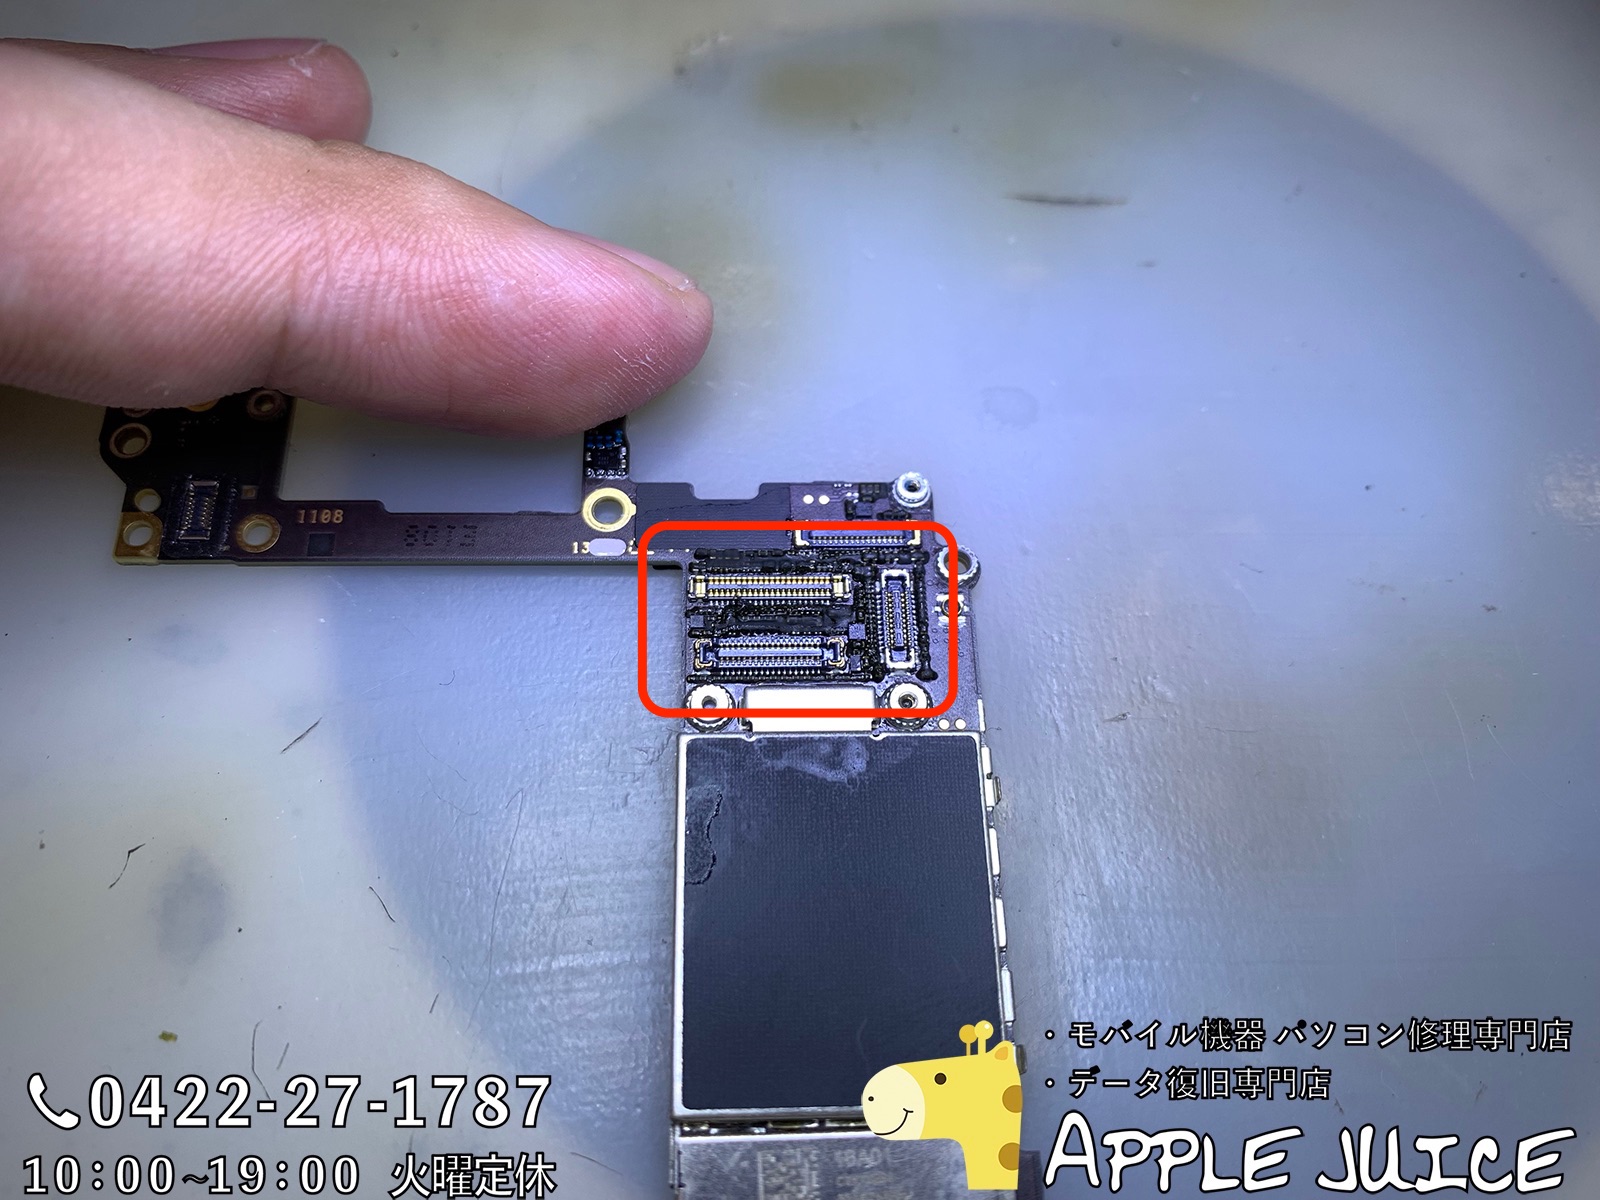 Iphone基盤修理実績 Iphone6s 自分でバッテリー交換後 画面が真っ暗 バックライトがつかない Iphone Ipad Ipod Mac修理 データ復旧 基板修理 Applejuice吉祥寺店